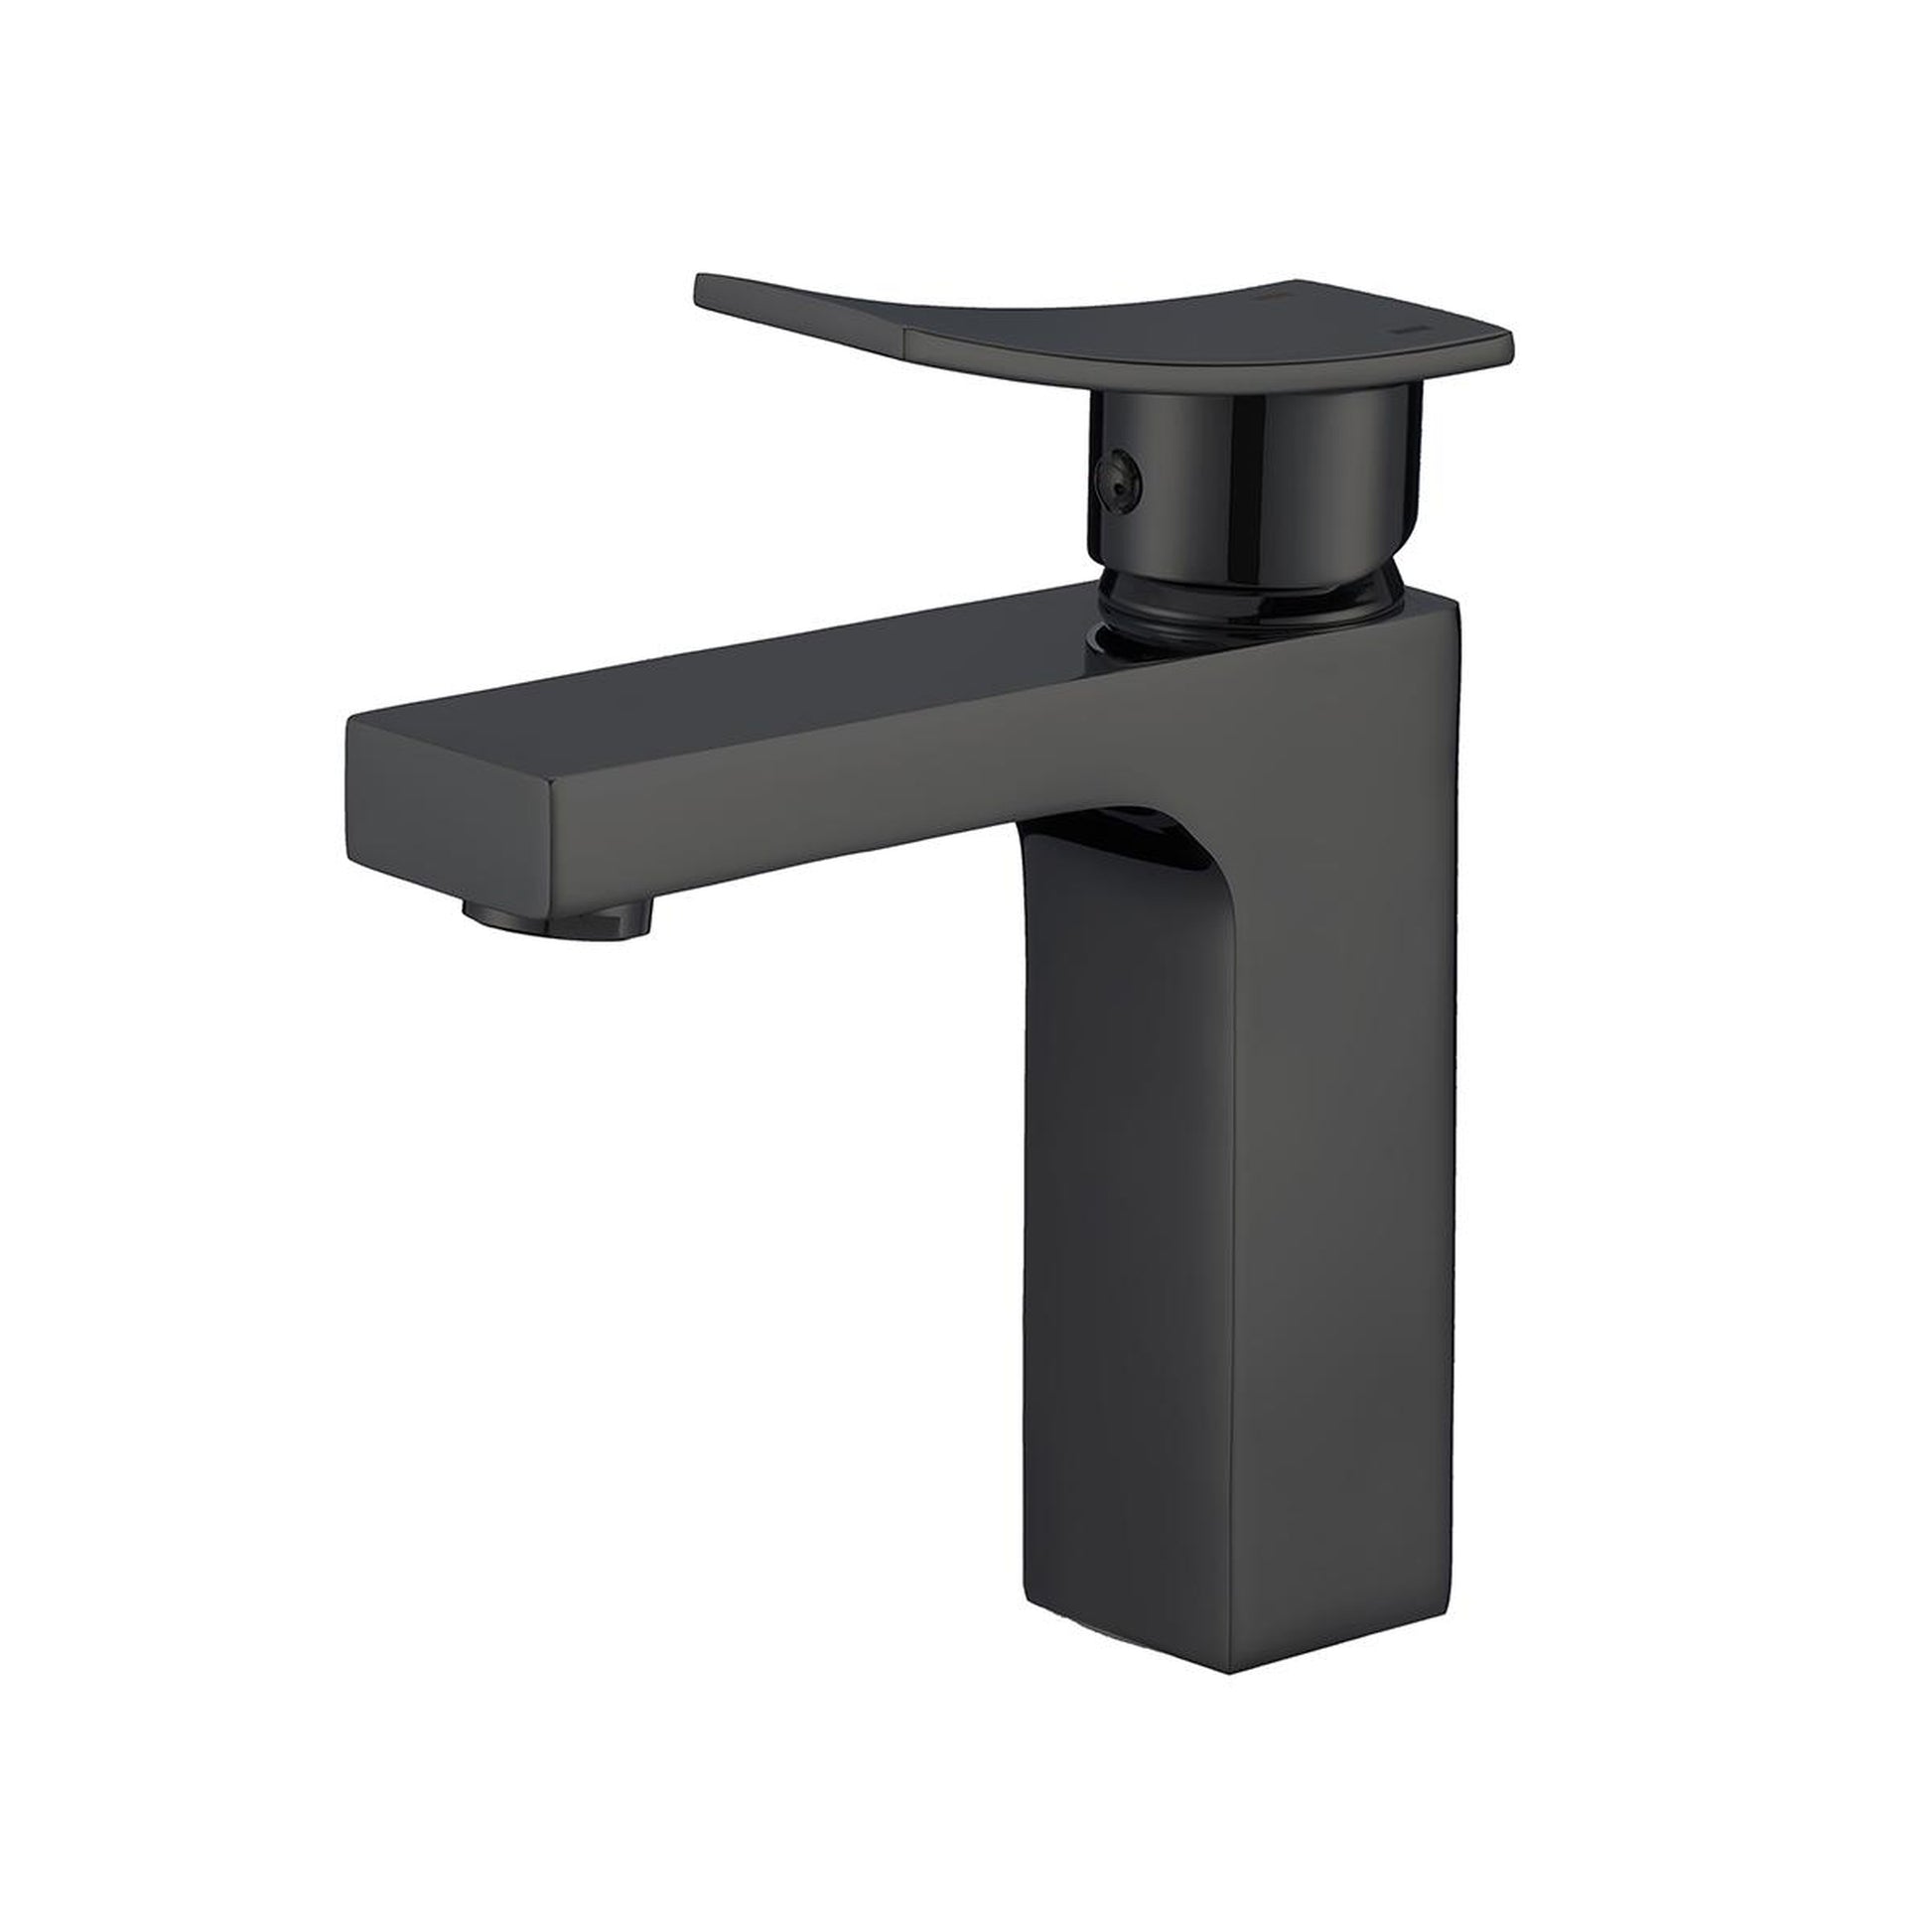 Pelican Int'l Cascade Series PL-8142 Single Hole Bathroom Faucet In Matte Black Finish